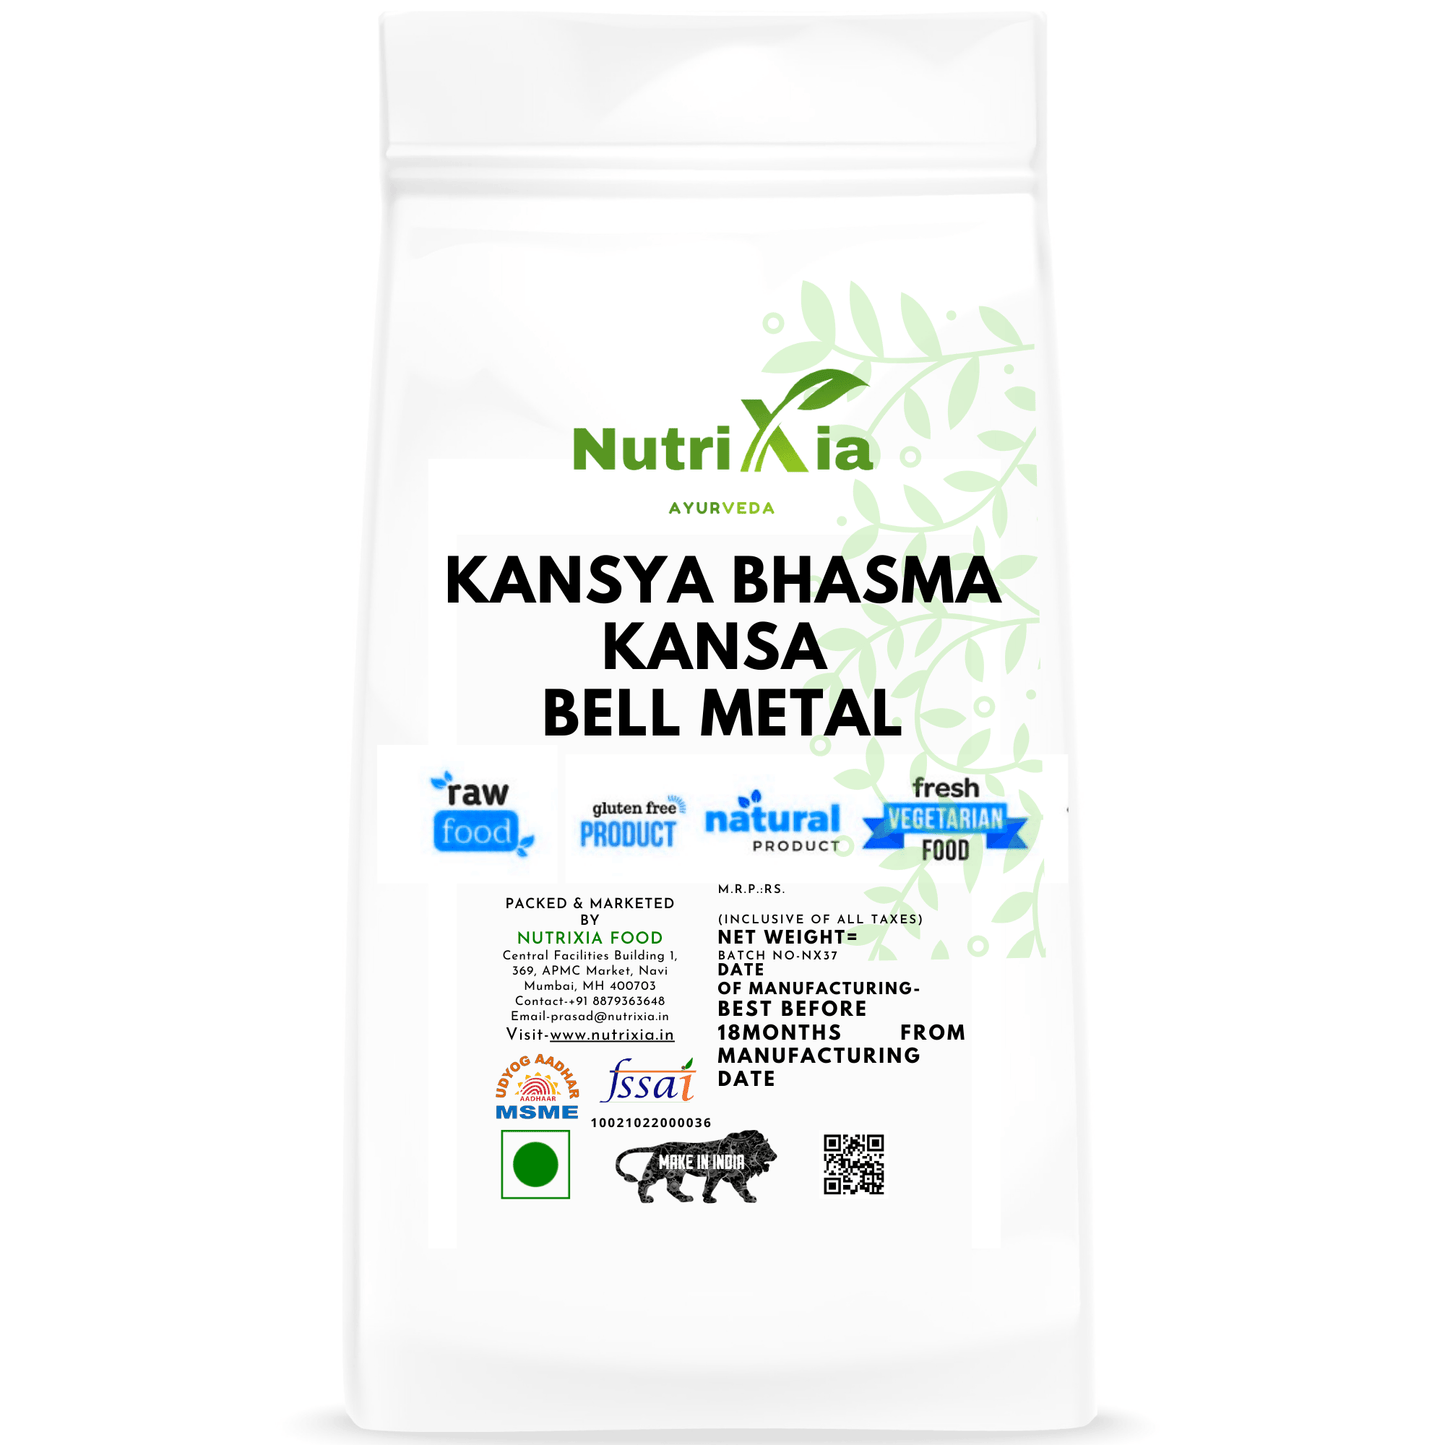 Kansya Bhasma Kansa 
Bell Metal -Nutrixia Food